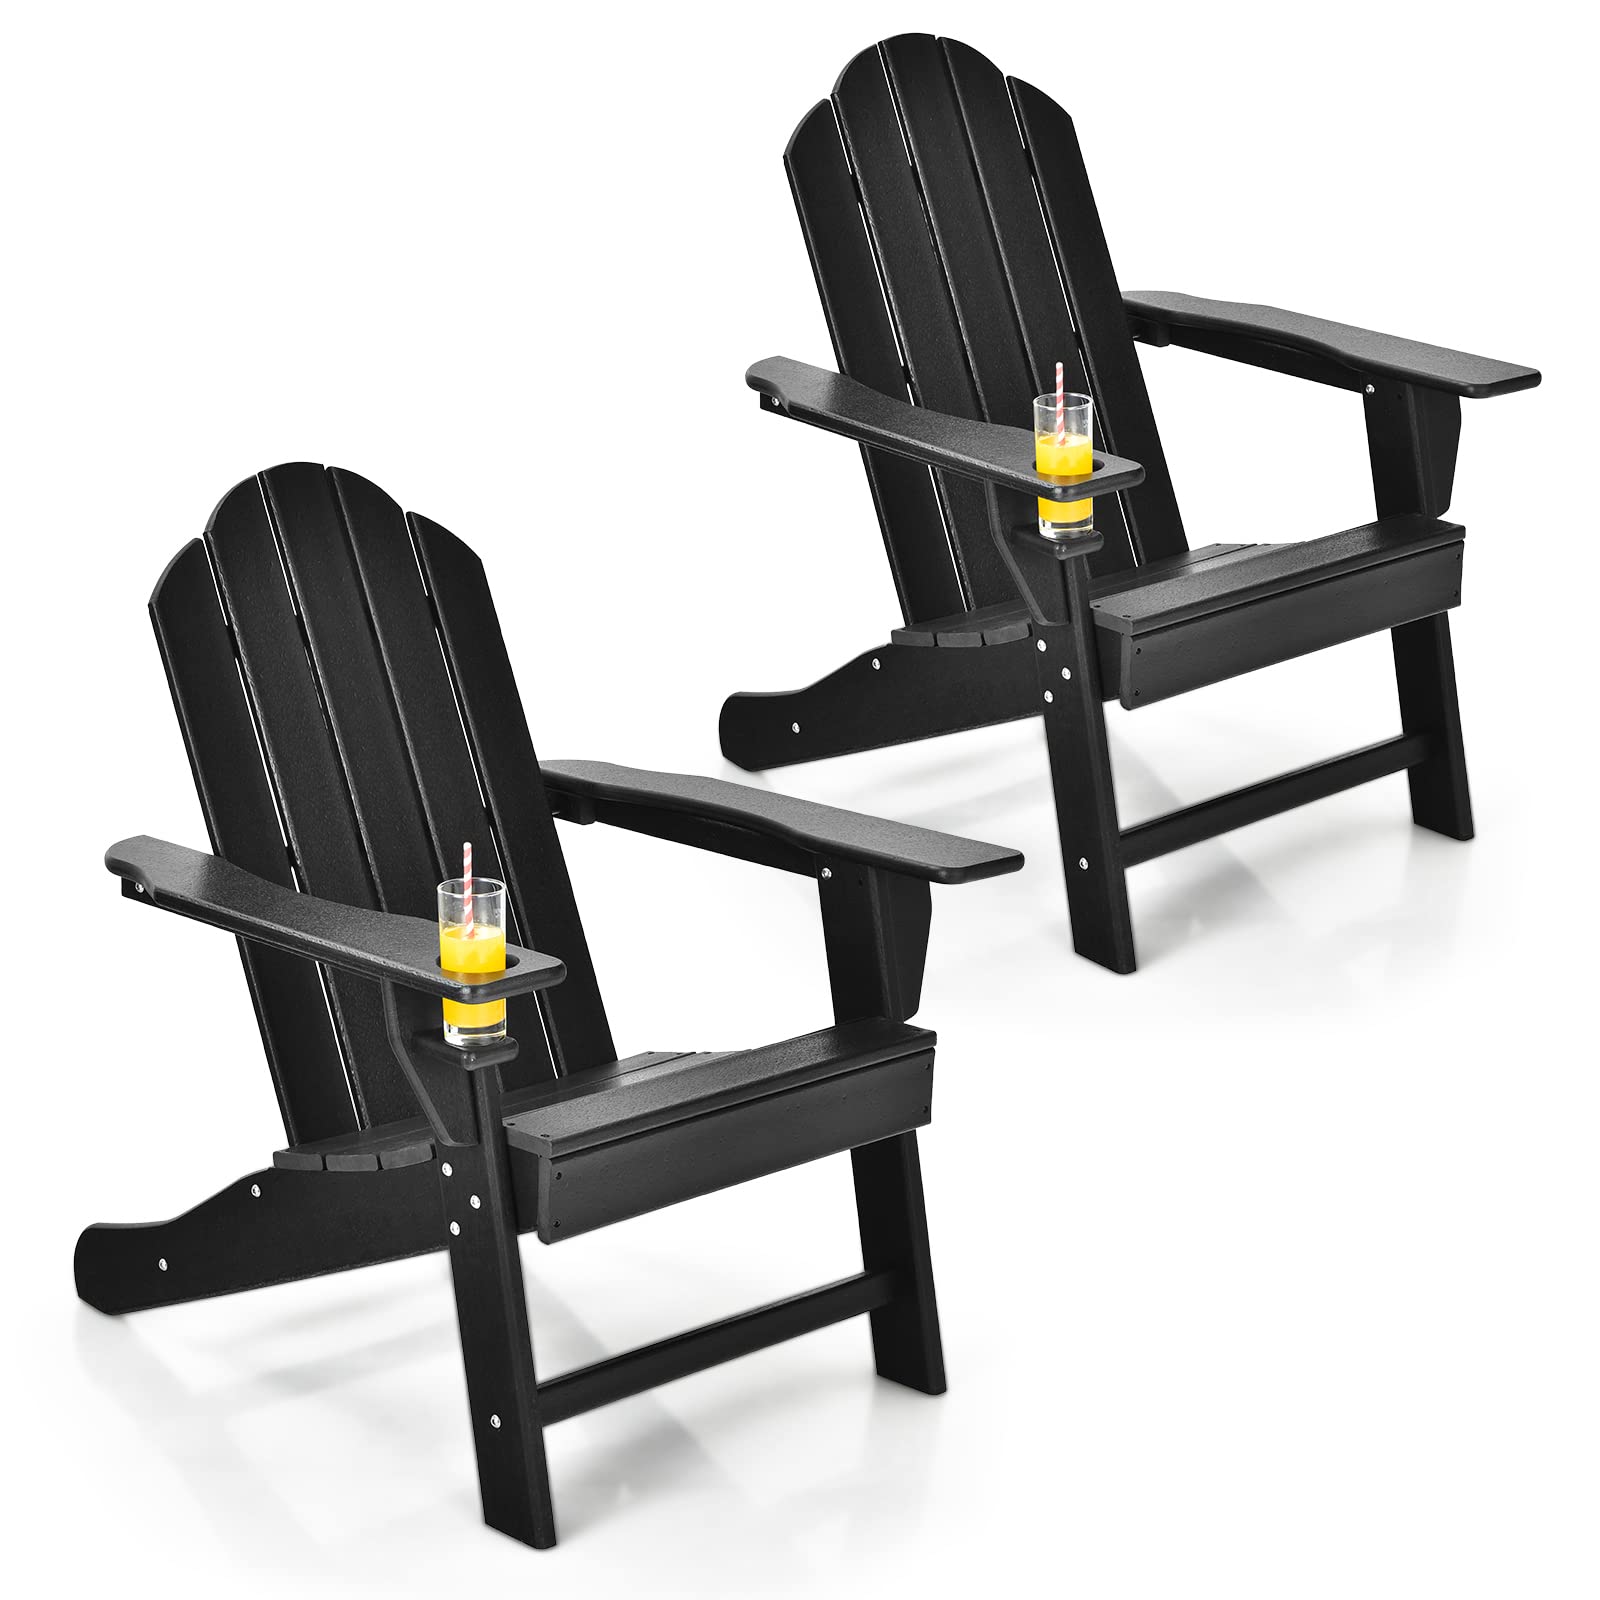 Giantex Adirondack Chair, Black